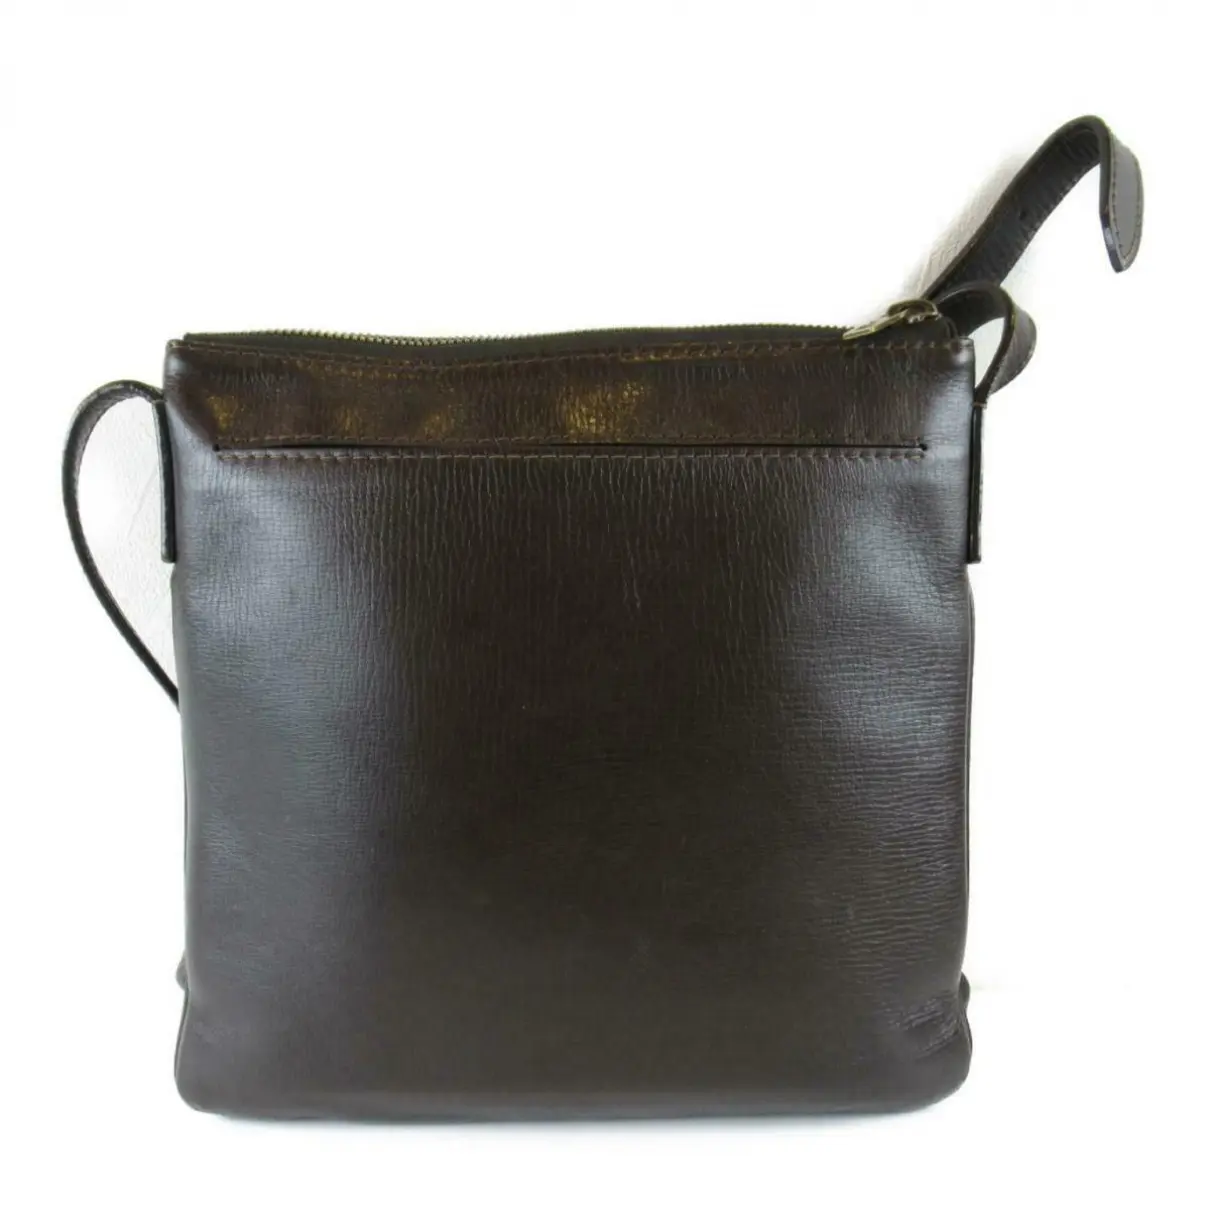 Buy Louis Vuitton Utah leather crossbody bag online